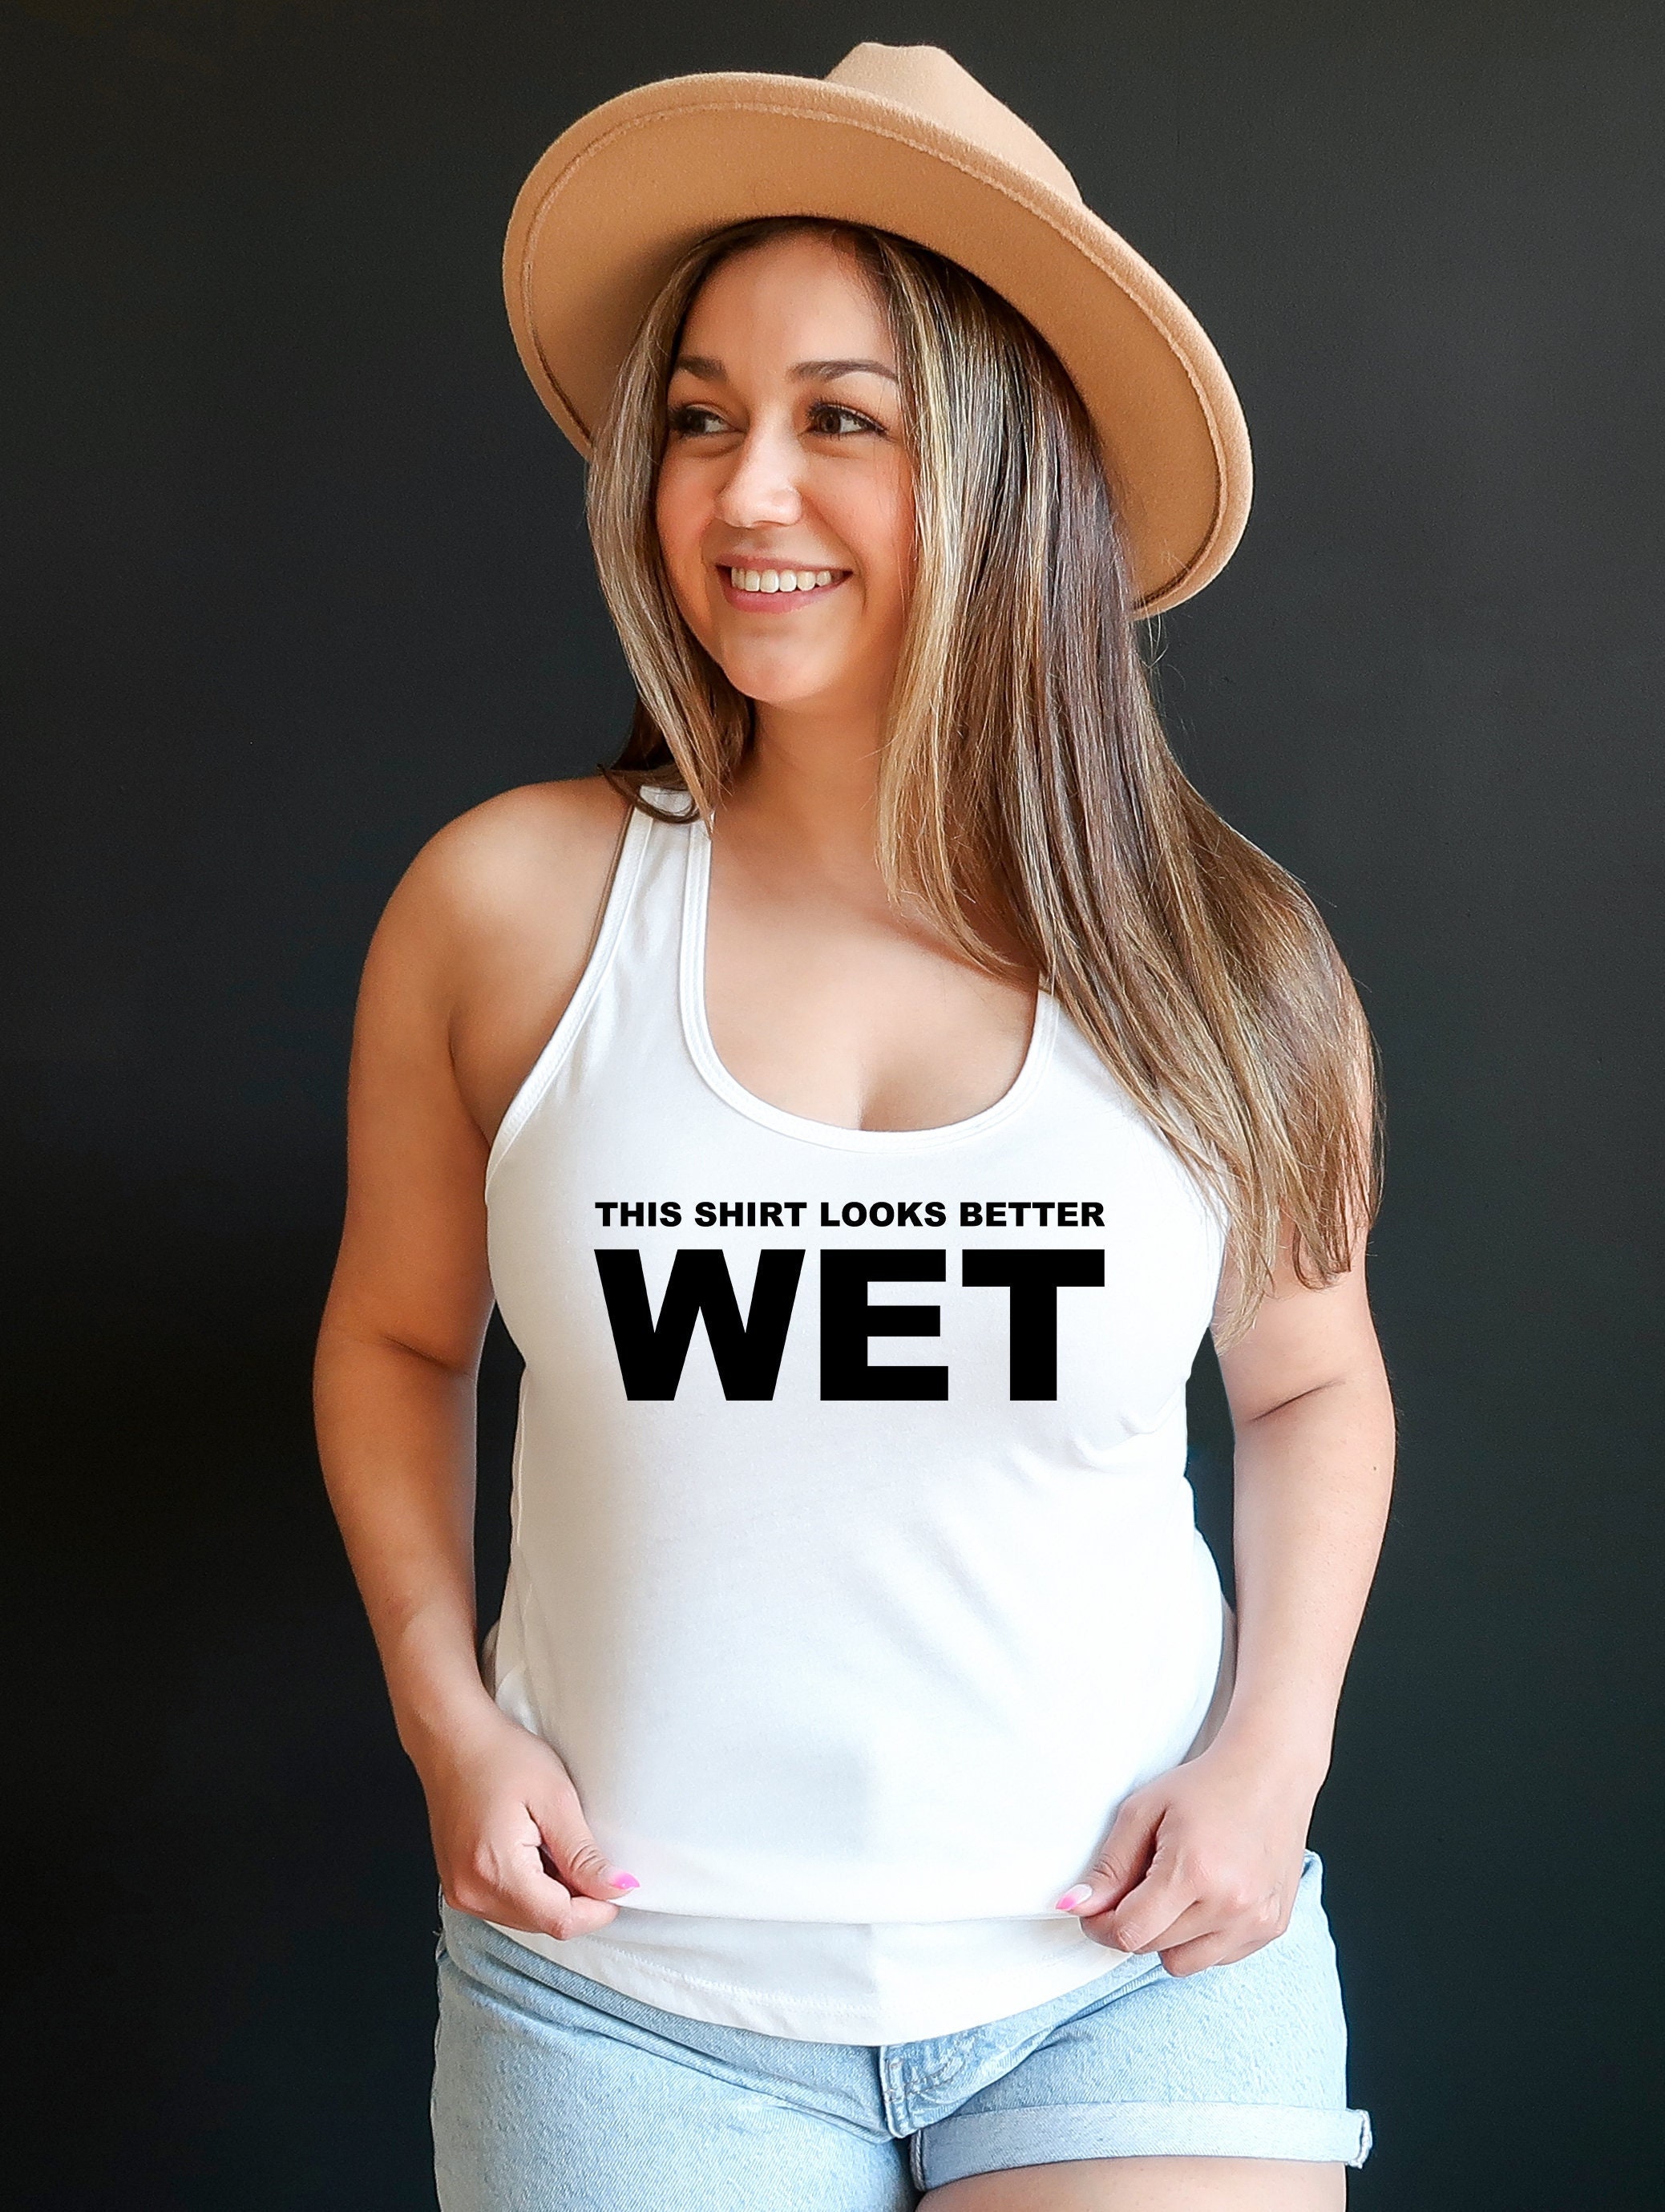 Wet T Shirt Titties tube safe